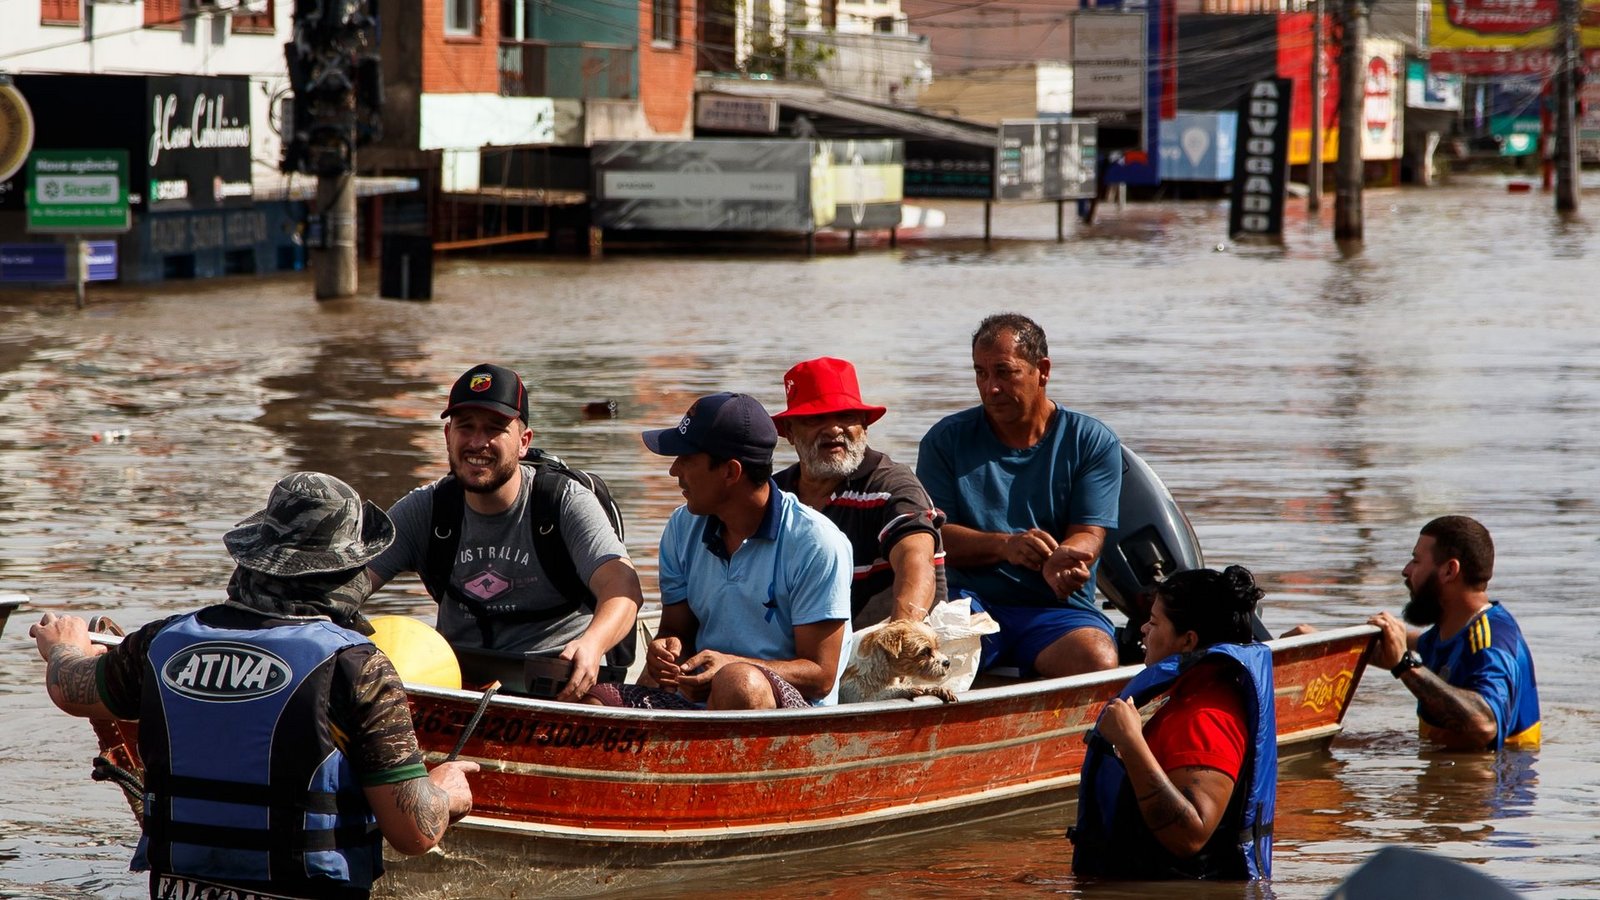 Rettungskräfte sind in der Region Rio Grande do Sul im Einsatz.Foto: Claudia Martini/XinHua/dpa